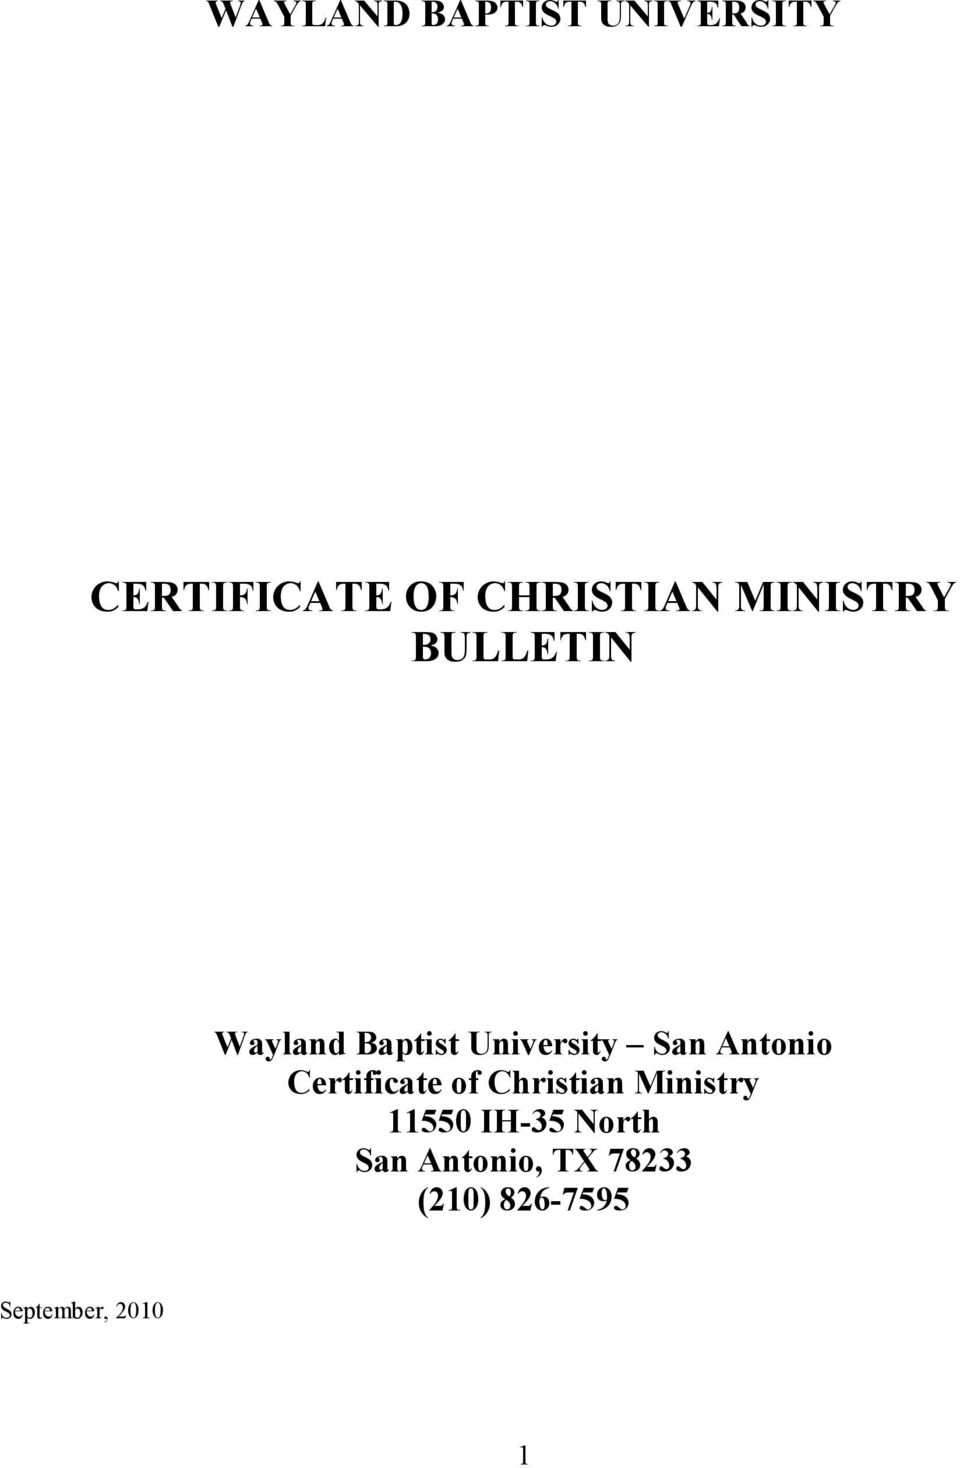 Antonio Certificate of Christian Ministry 11550 IH-35